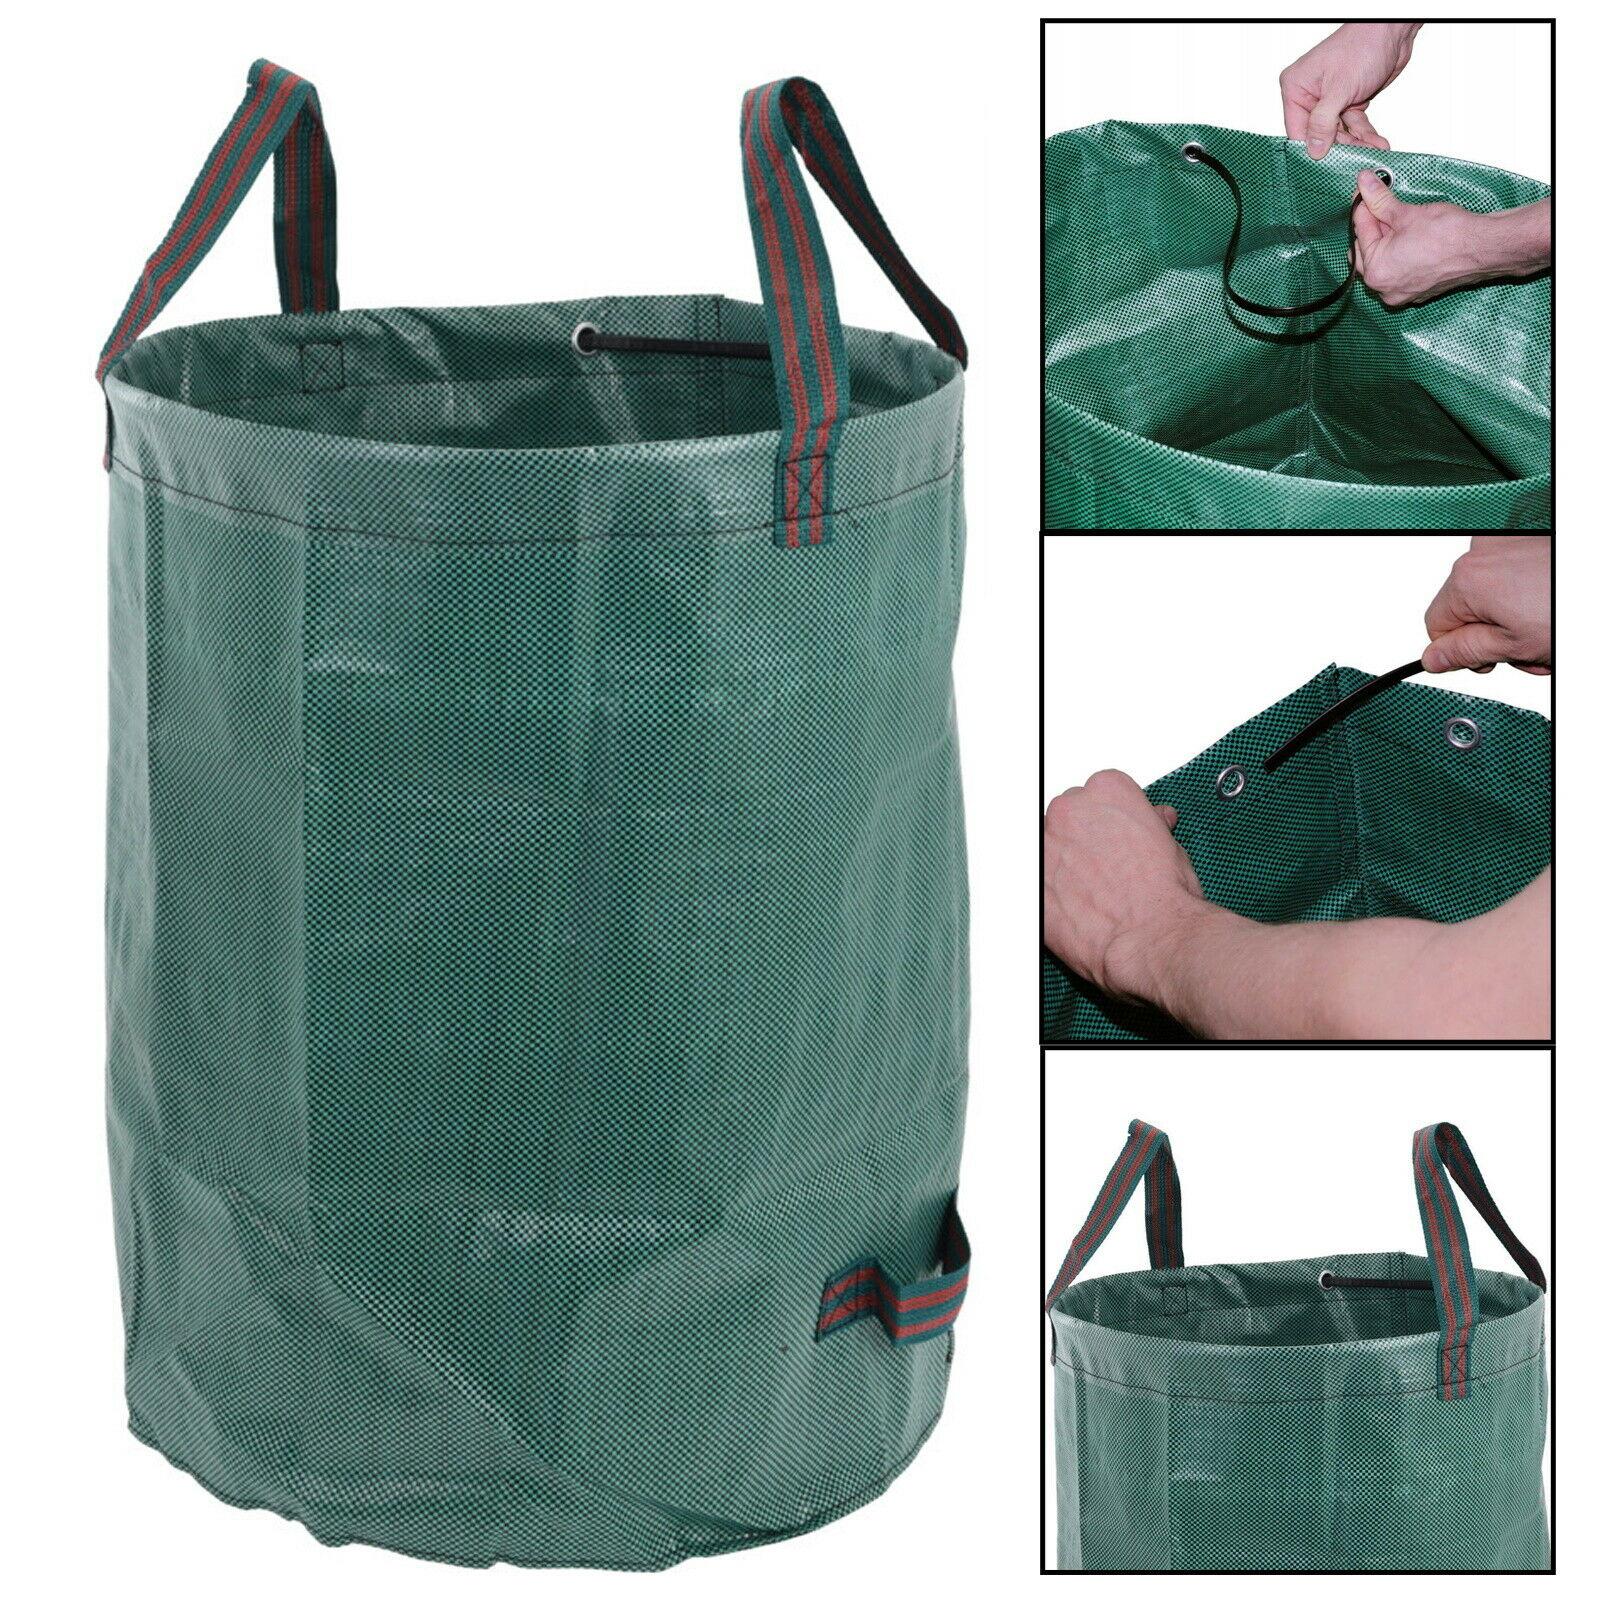 Garden Yard Waste Bags Sacks, Reuseable Gardening Lawn Leaf Bag Garden Tote  Debris Container 